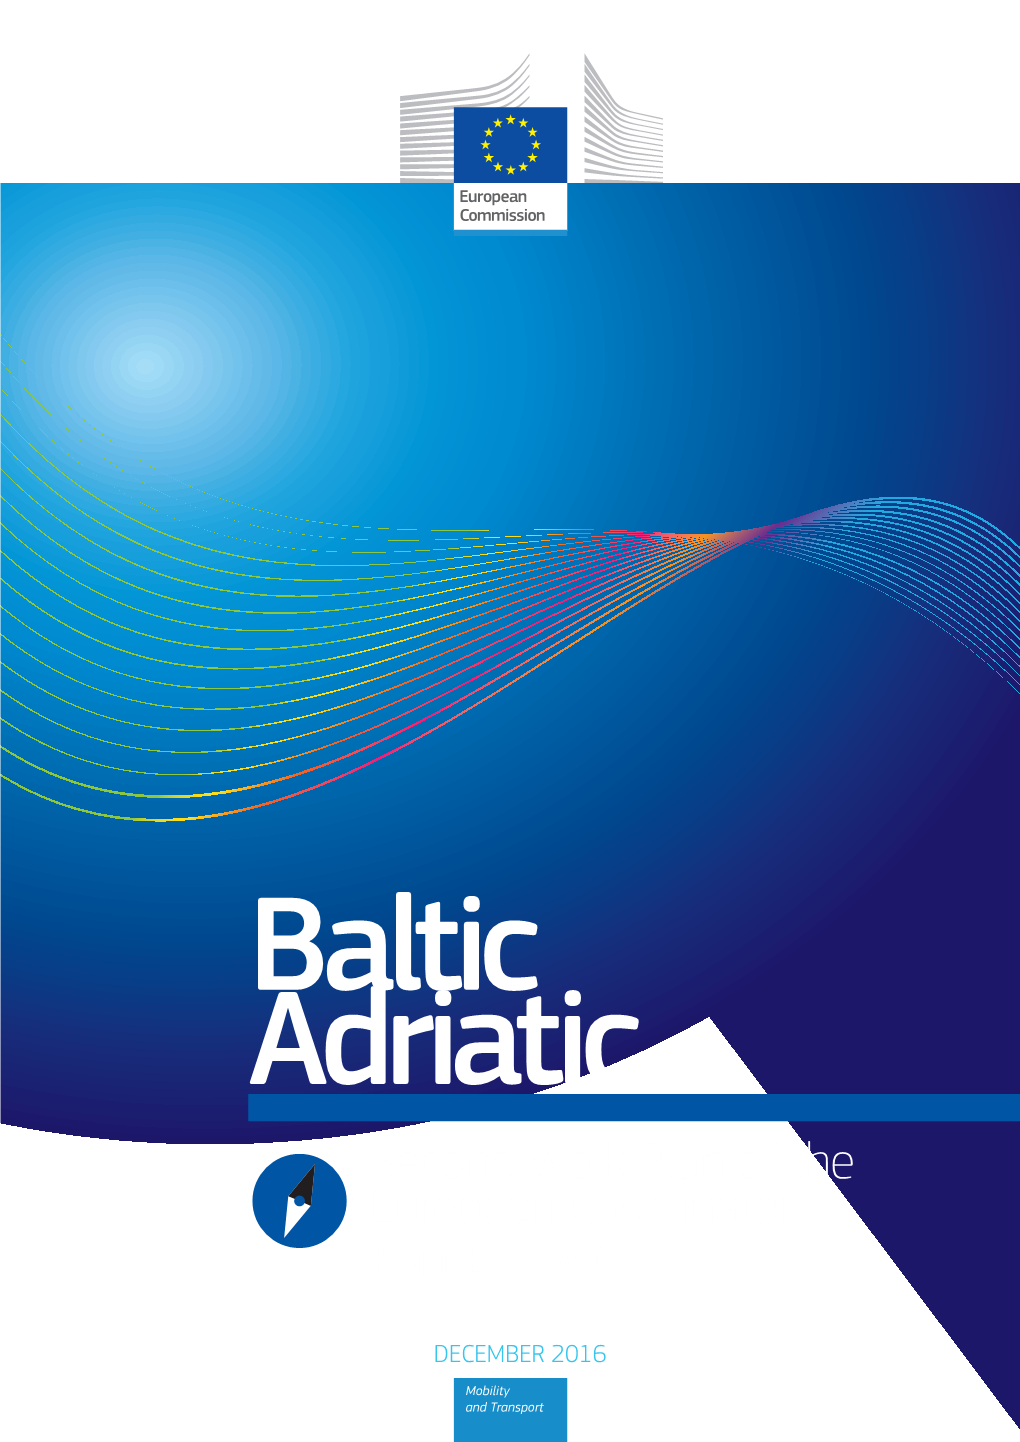 The Baltic-Adriatic Corridor Work Plan